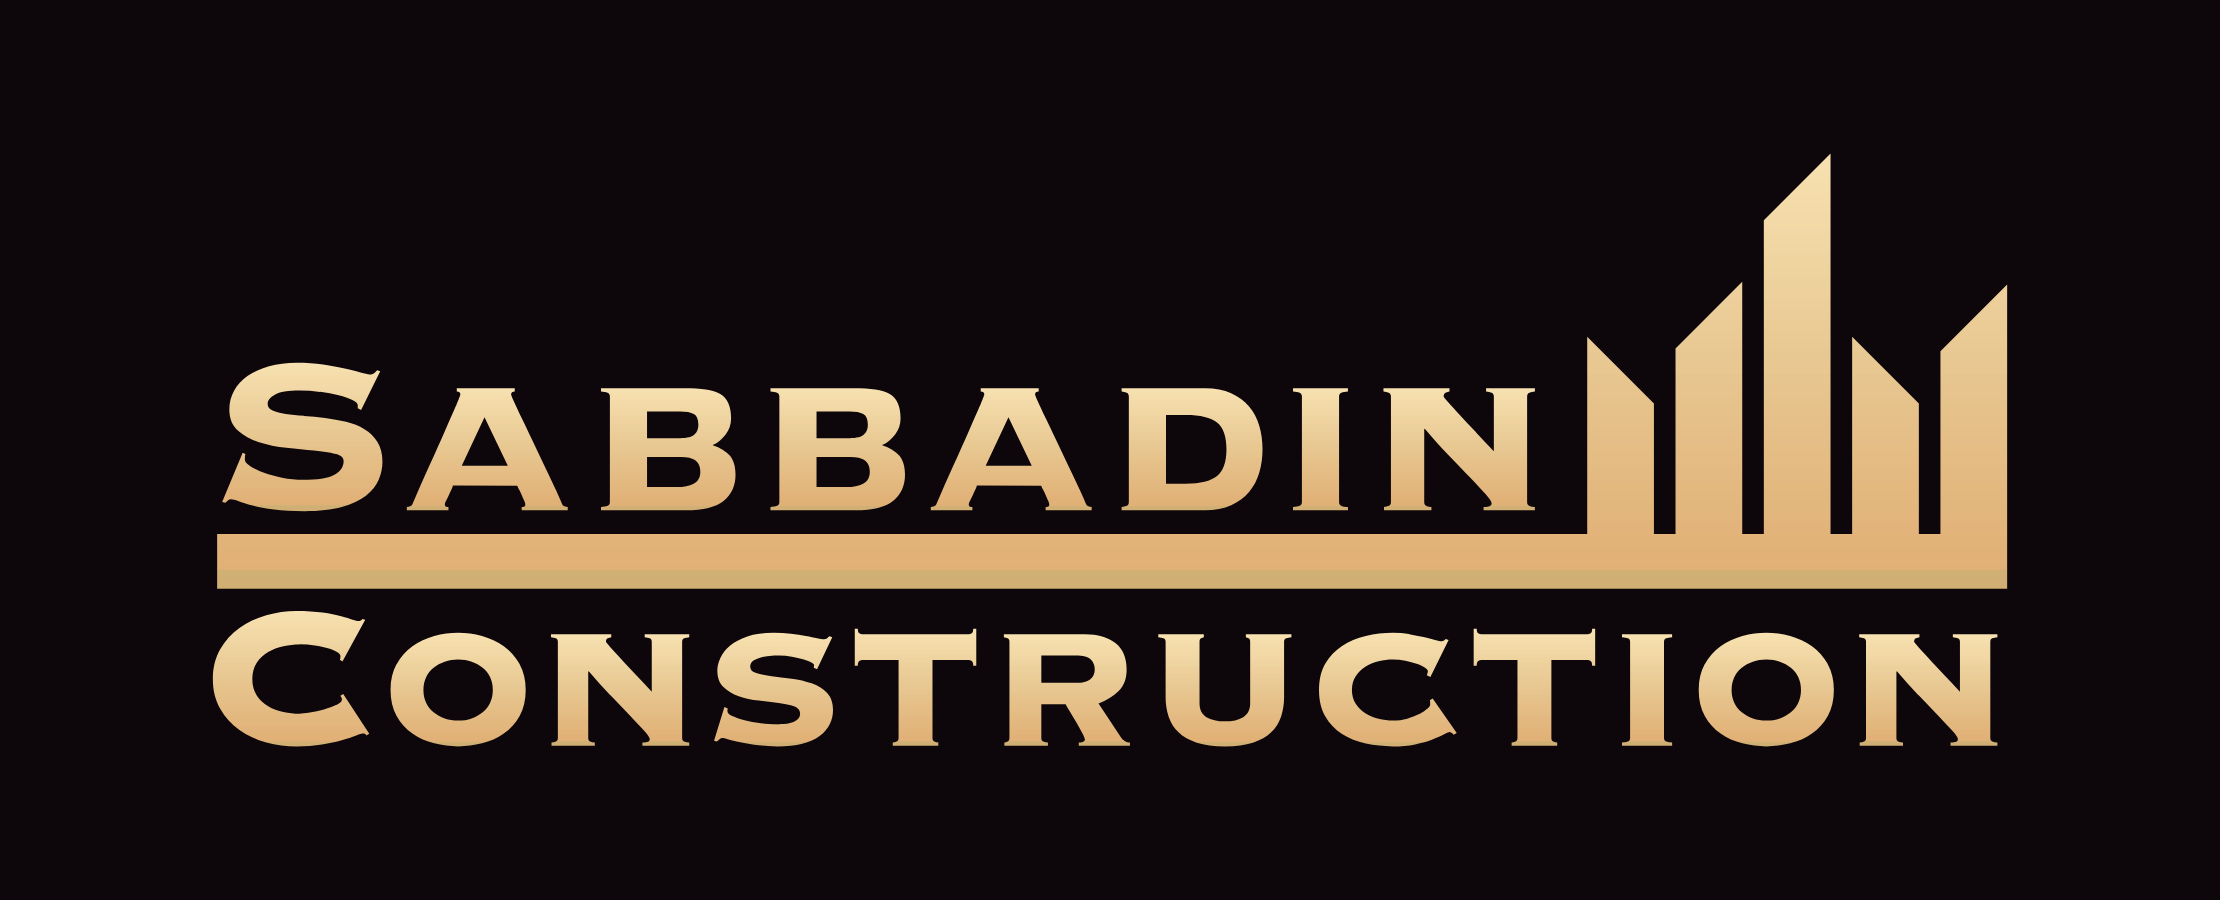 Sabbadin Construction